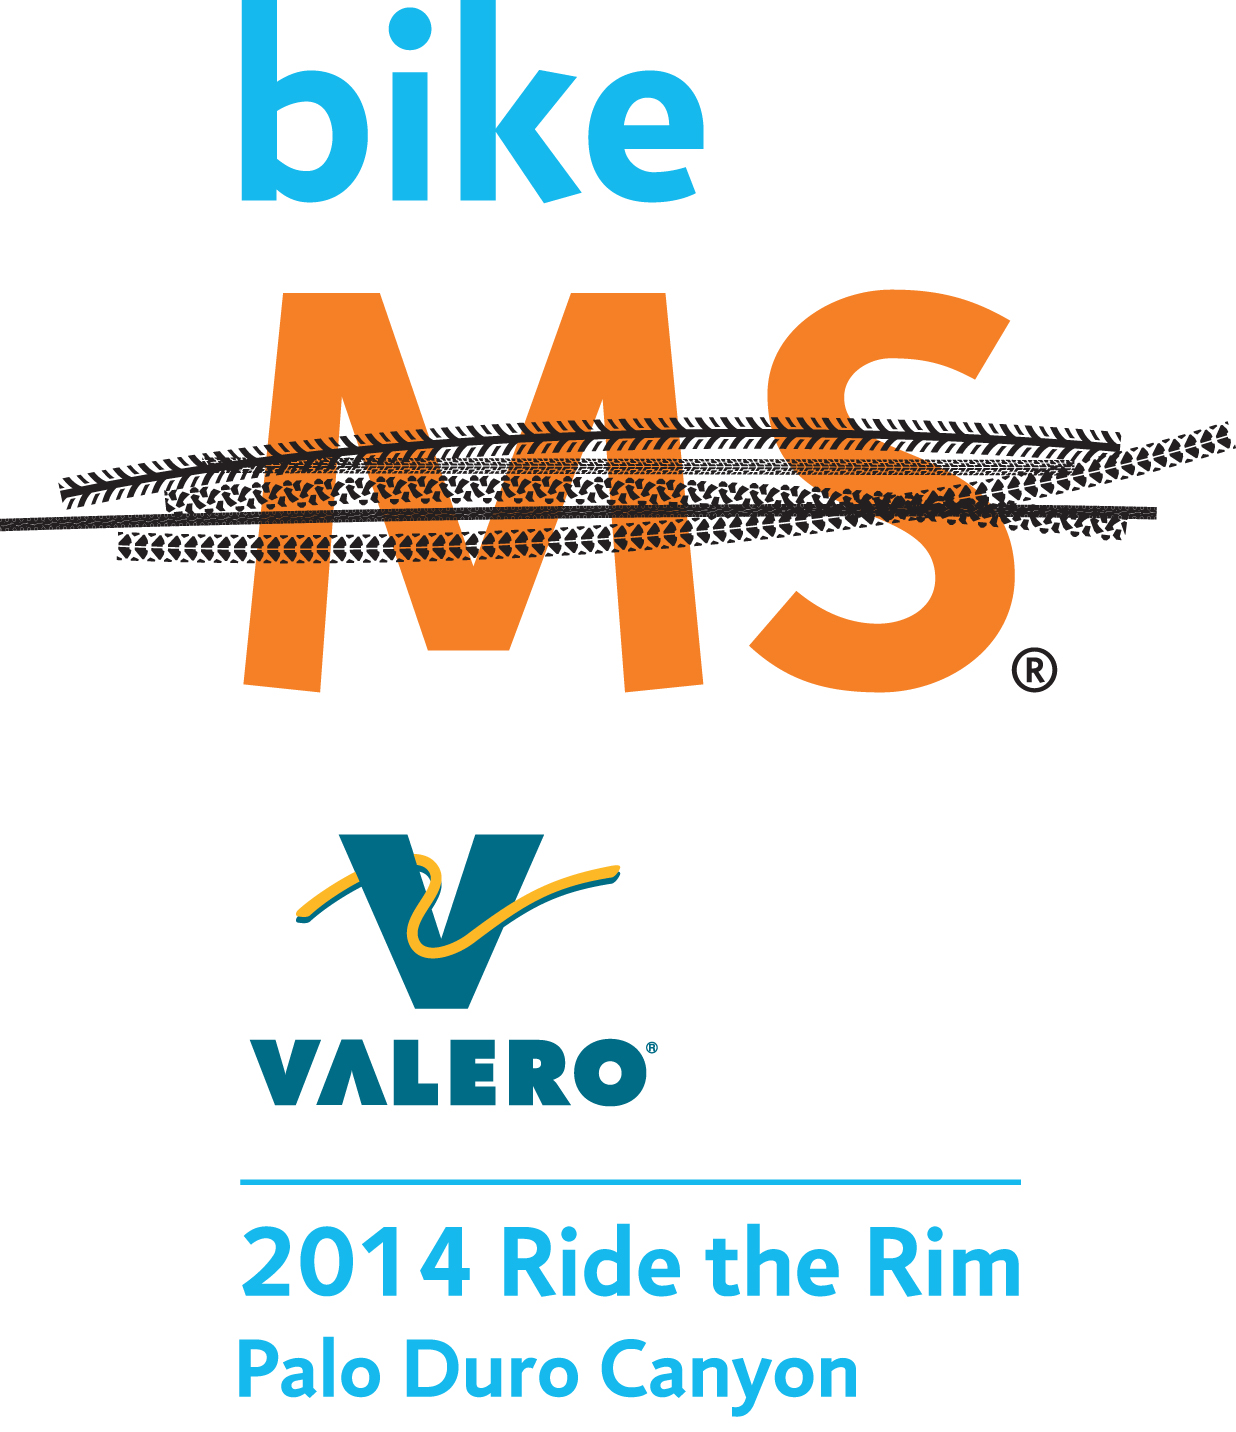 Ride Interview Bike MS Valero Ride the Rim Palo Duro Canyon, TX